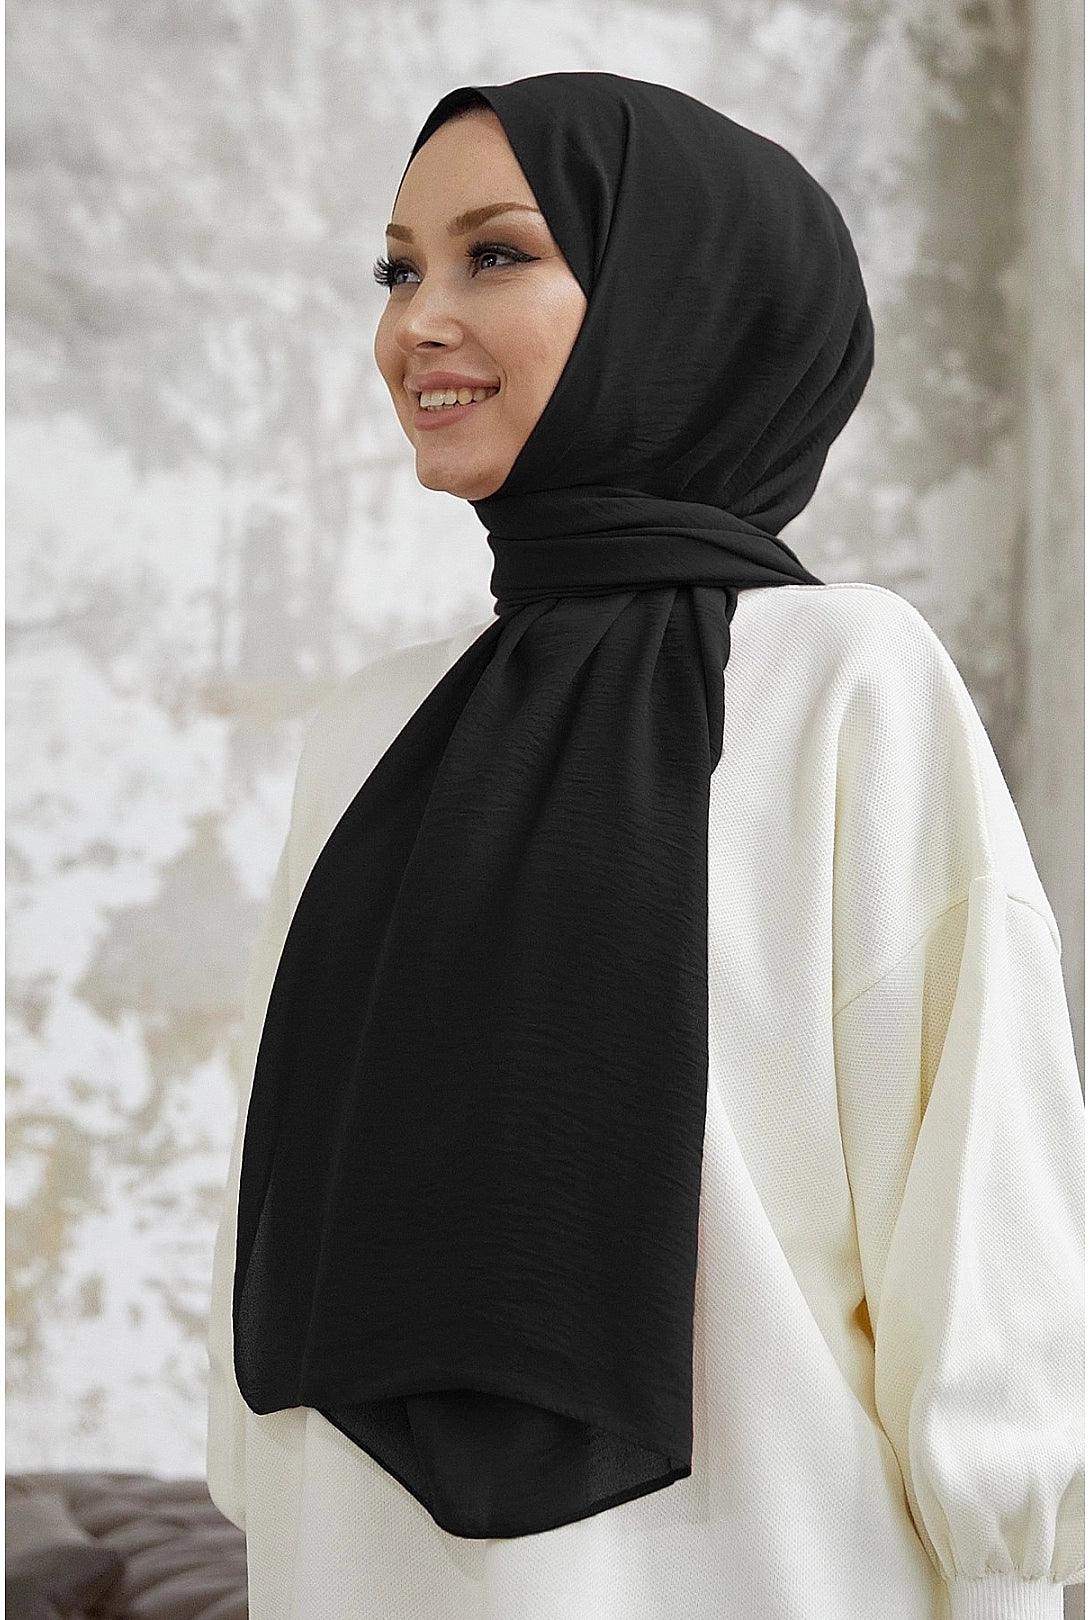 Jazz Cotton Muslim Black Hijab Scarf Shawl